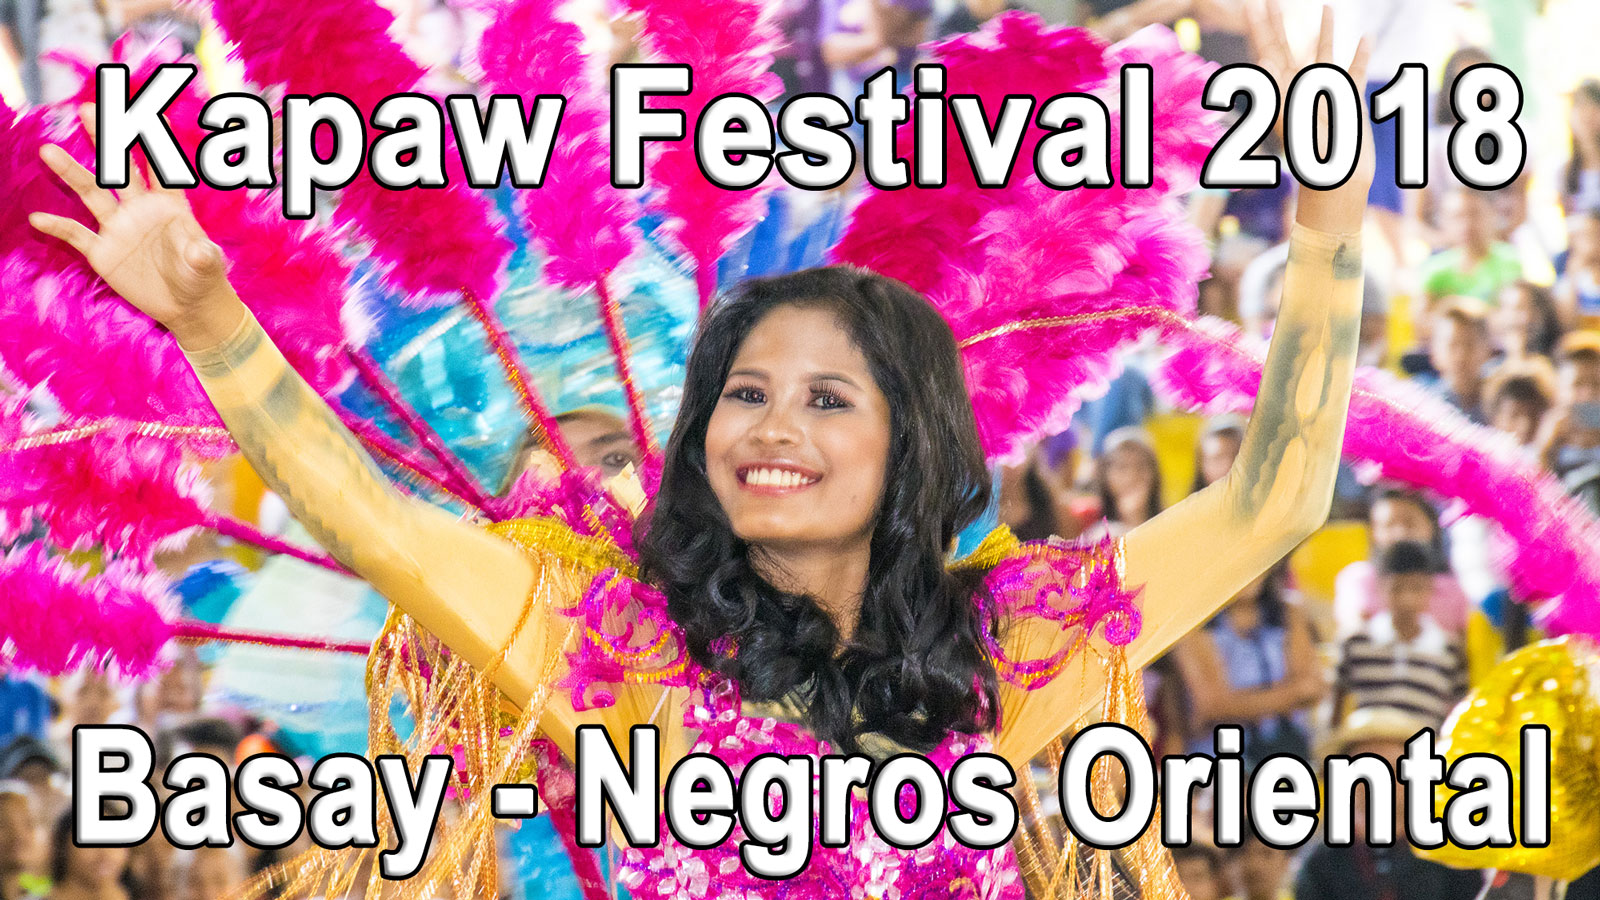 My trip to the Kapaw Festival 2018 - Basay -Negros Oriental